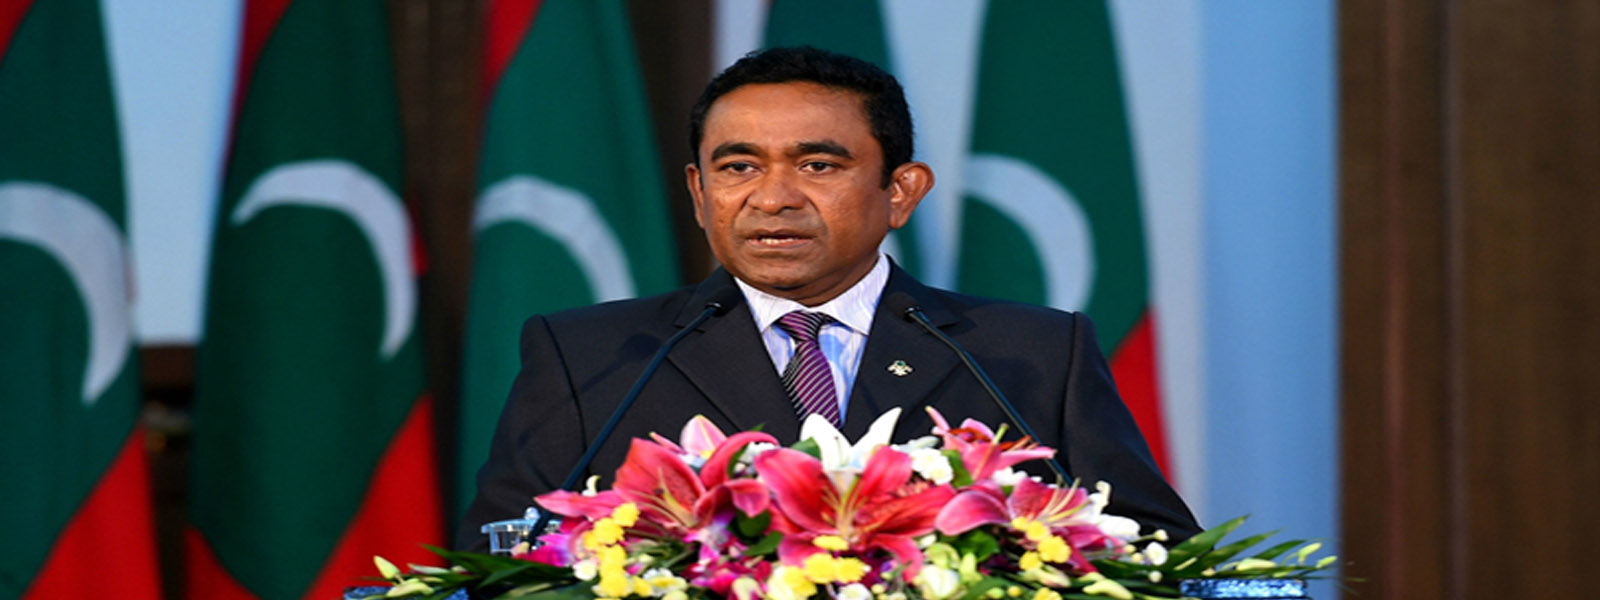 Maldives top court seeks to impeach president